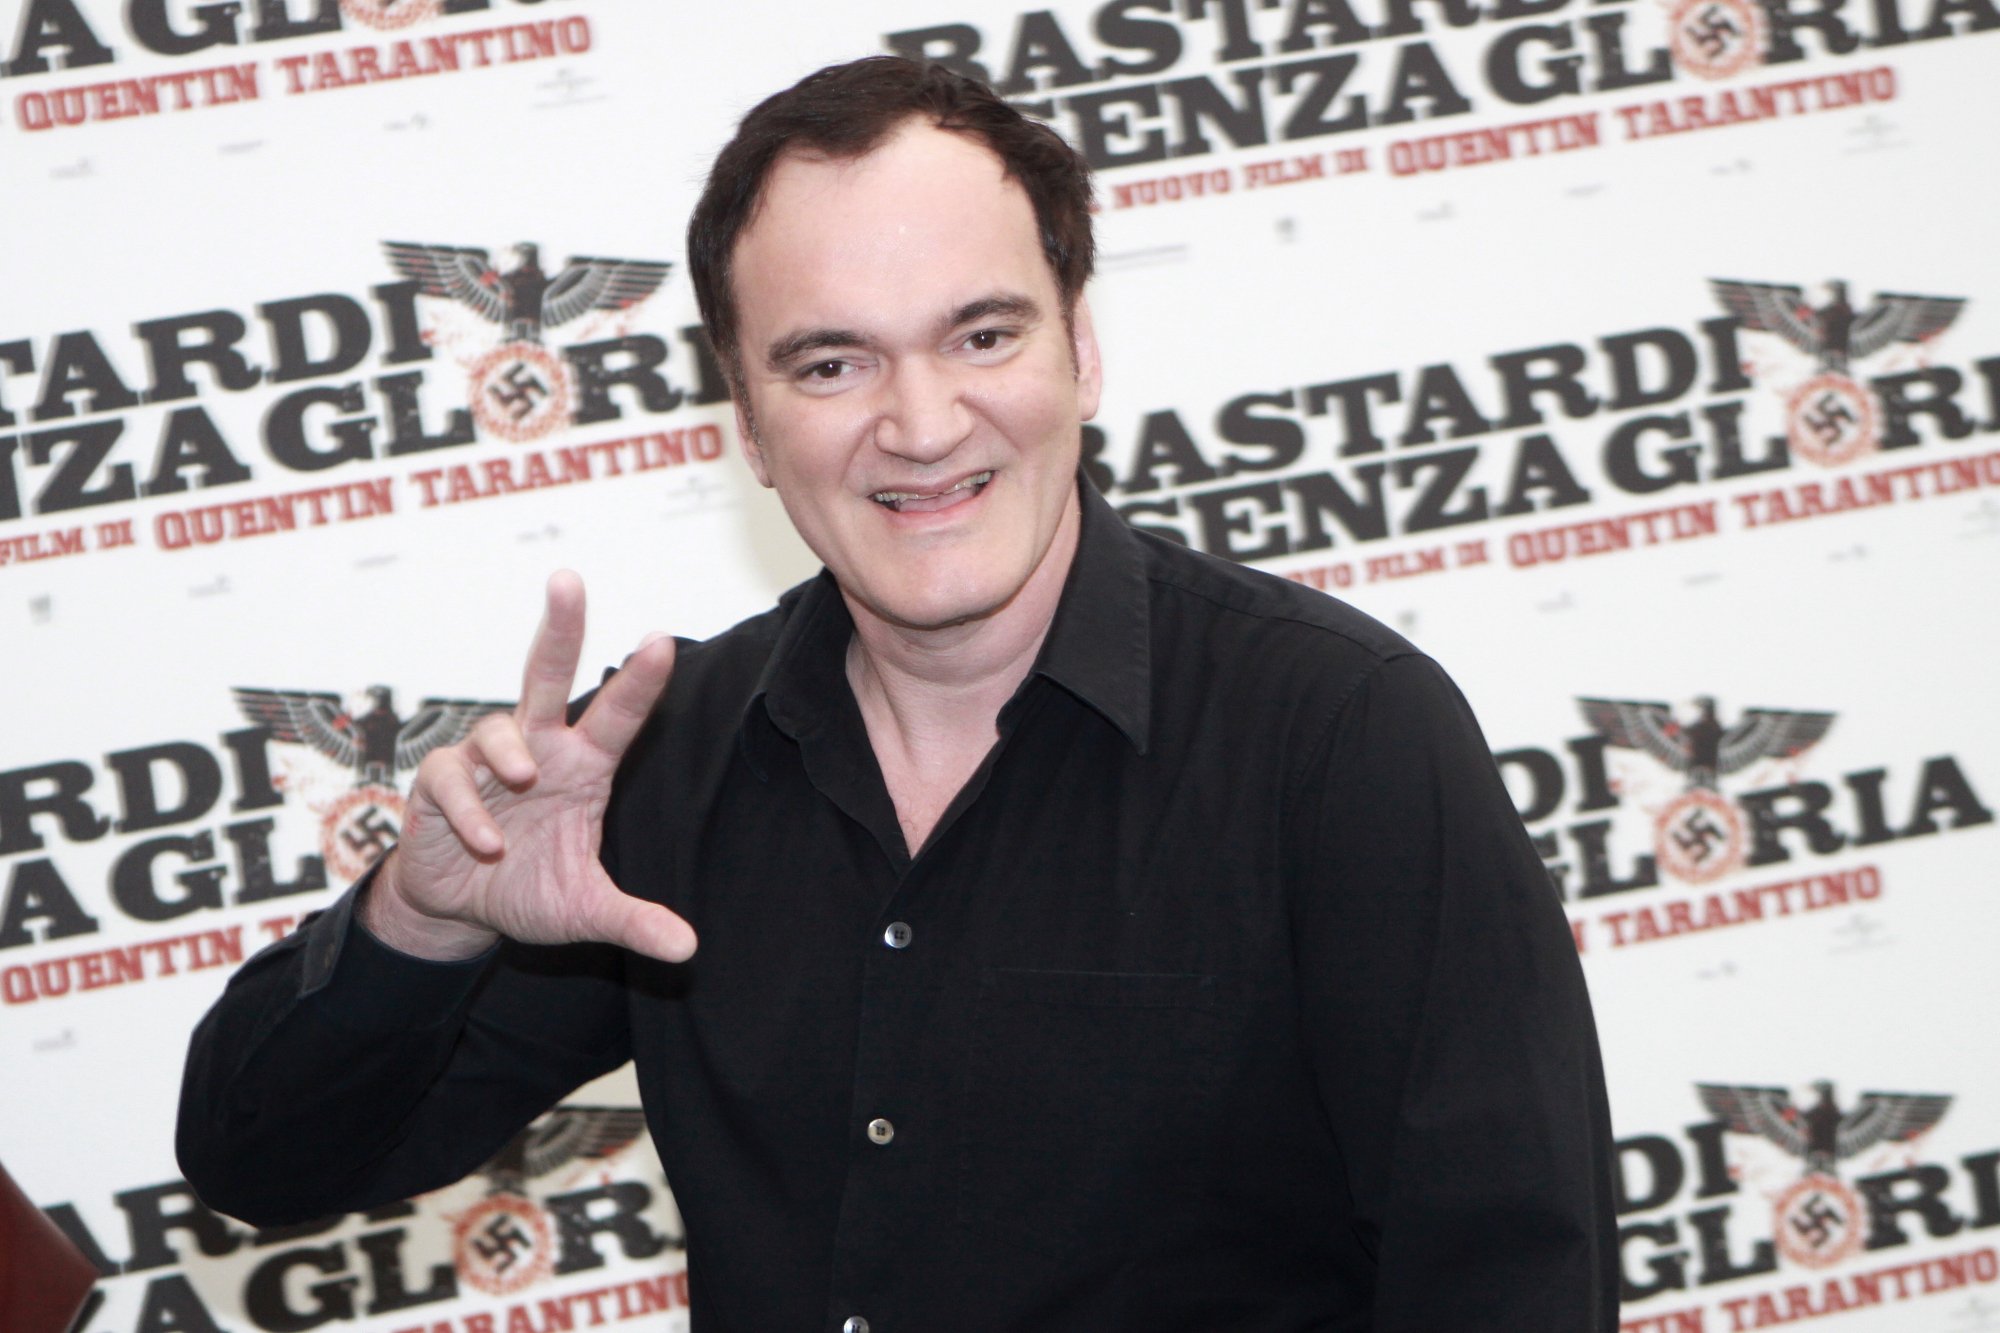 'Inglourious Basterds' Quentin Tarantino at the photocall wearing a black-collared shirt